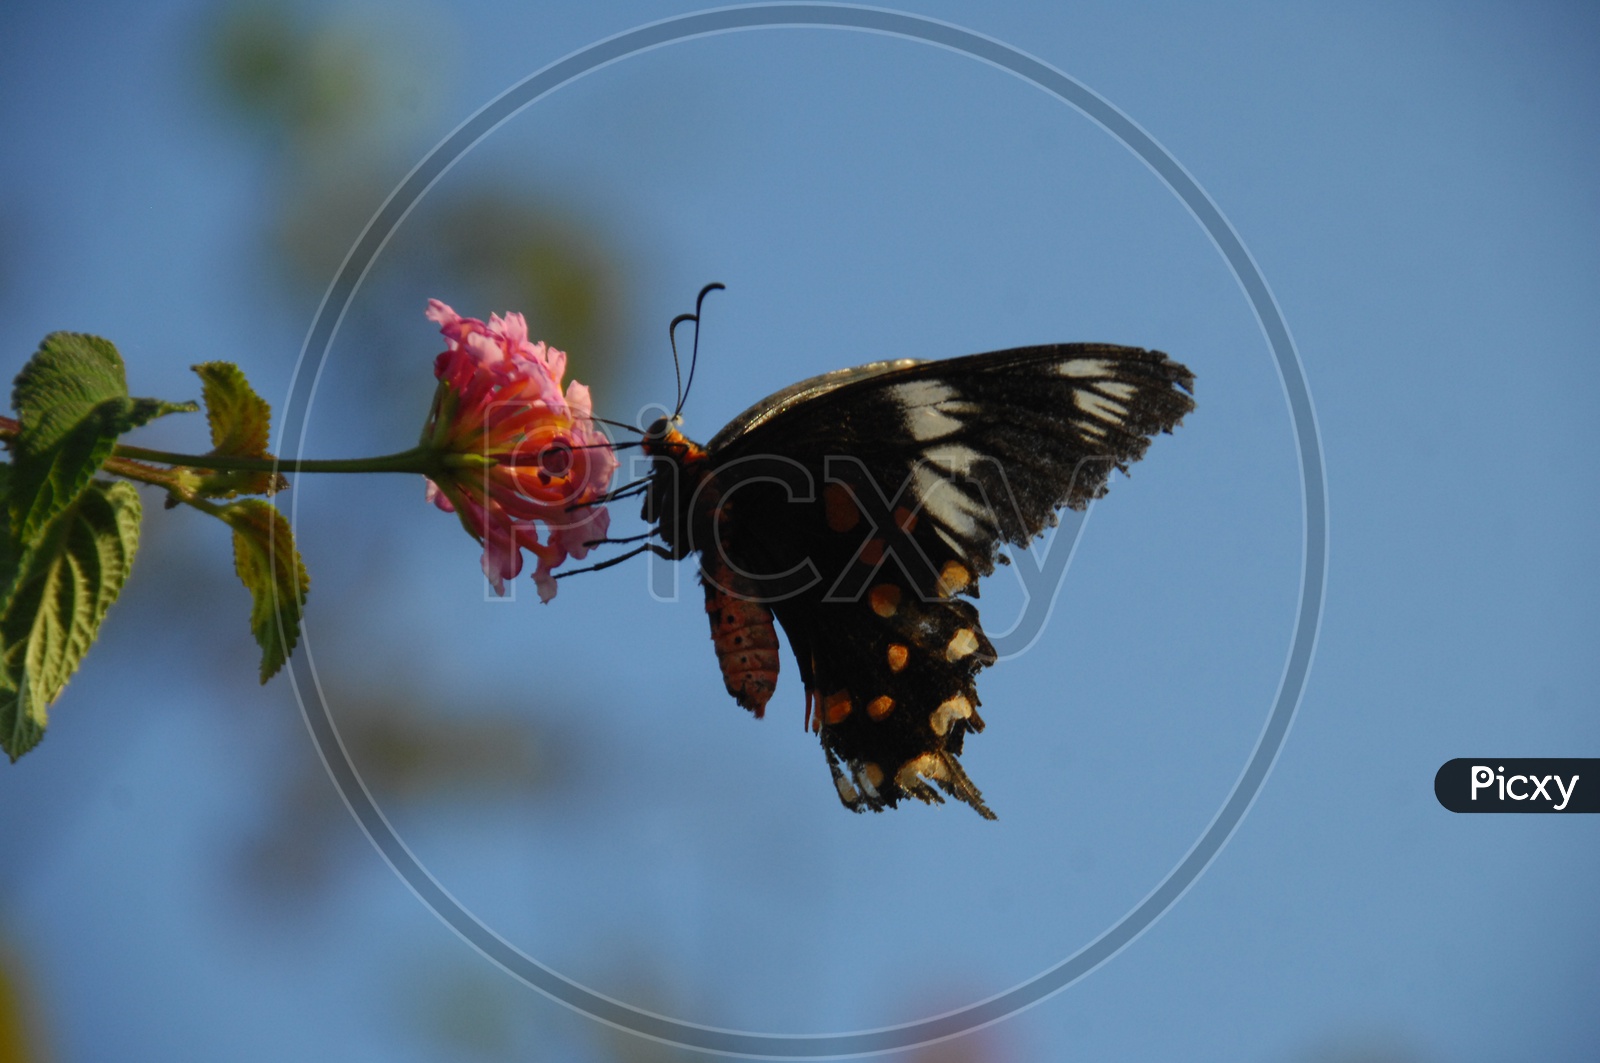 Crimson rose butterfly sucking nectar